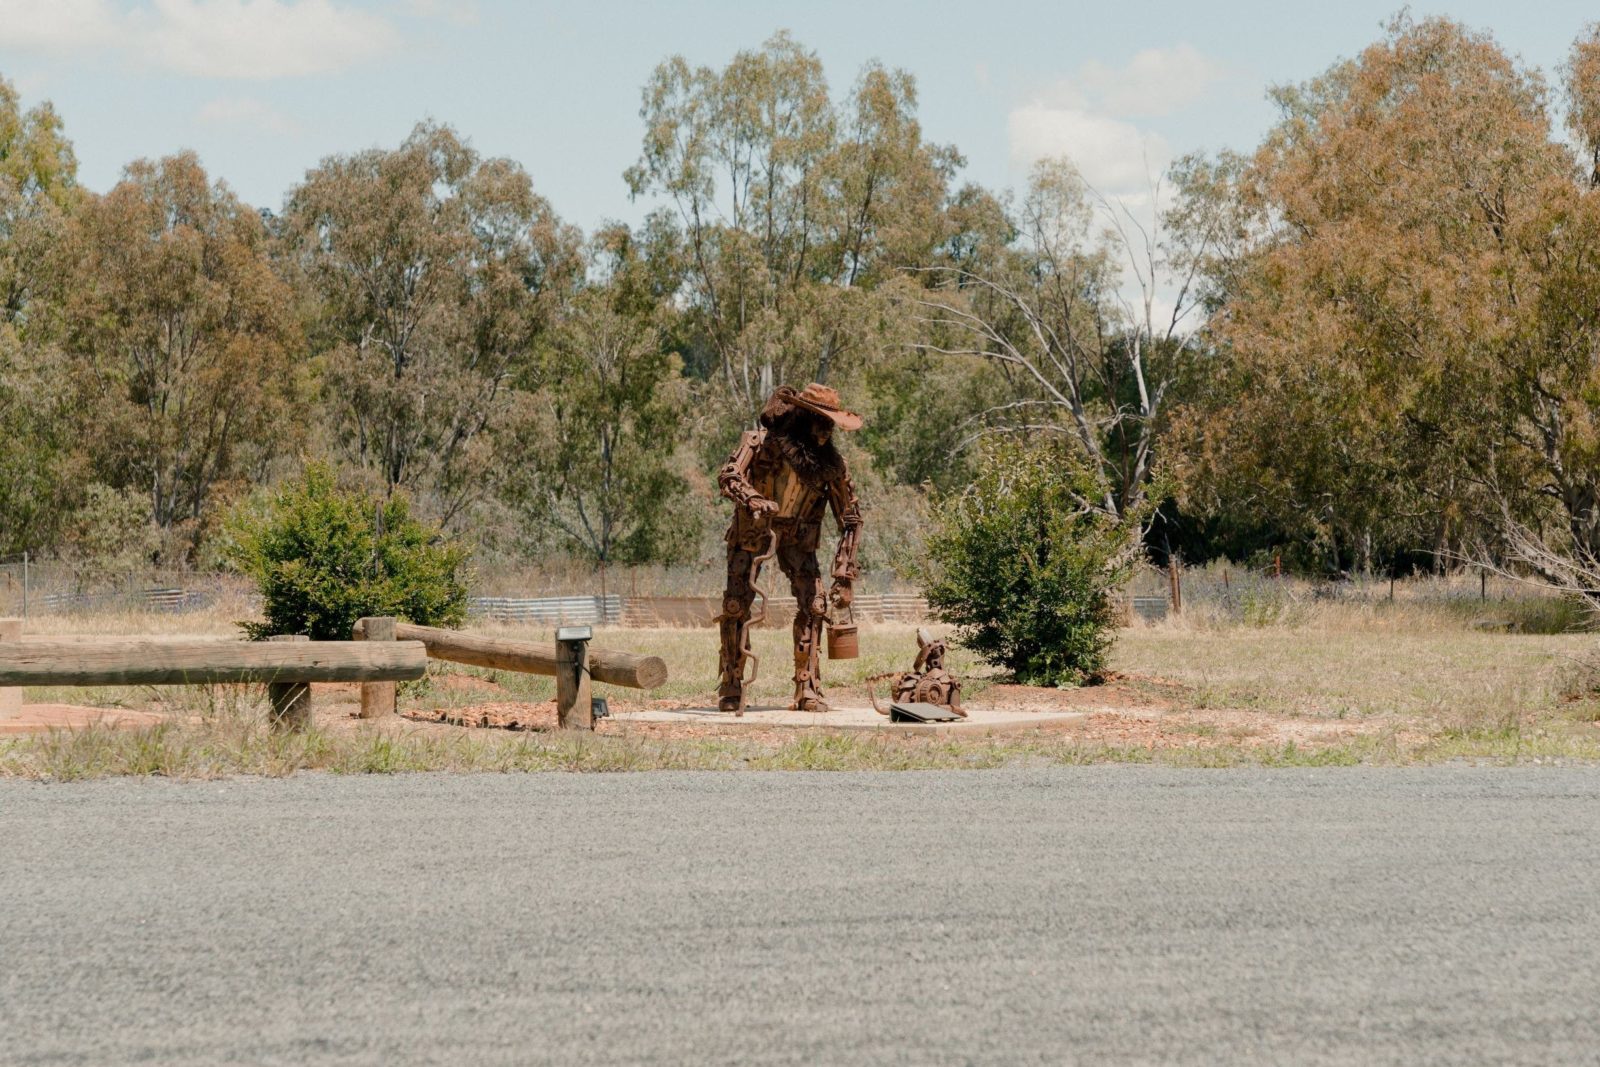 A scrap metal swagman and dog, set in a rural Australian landscape.